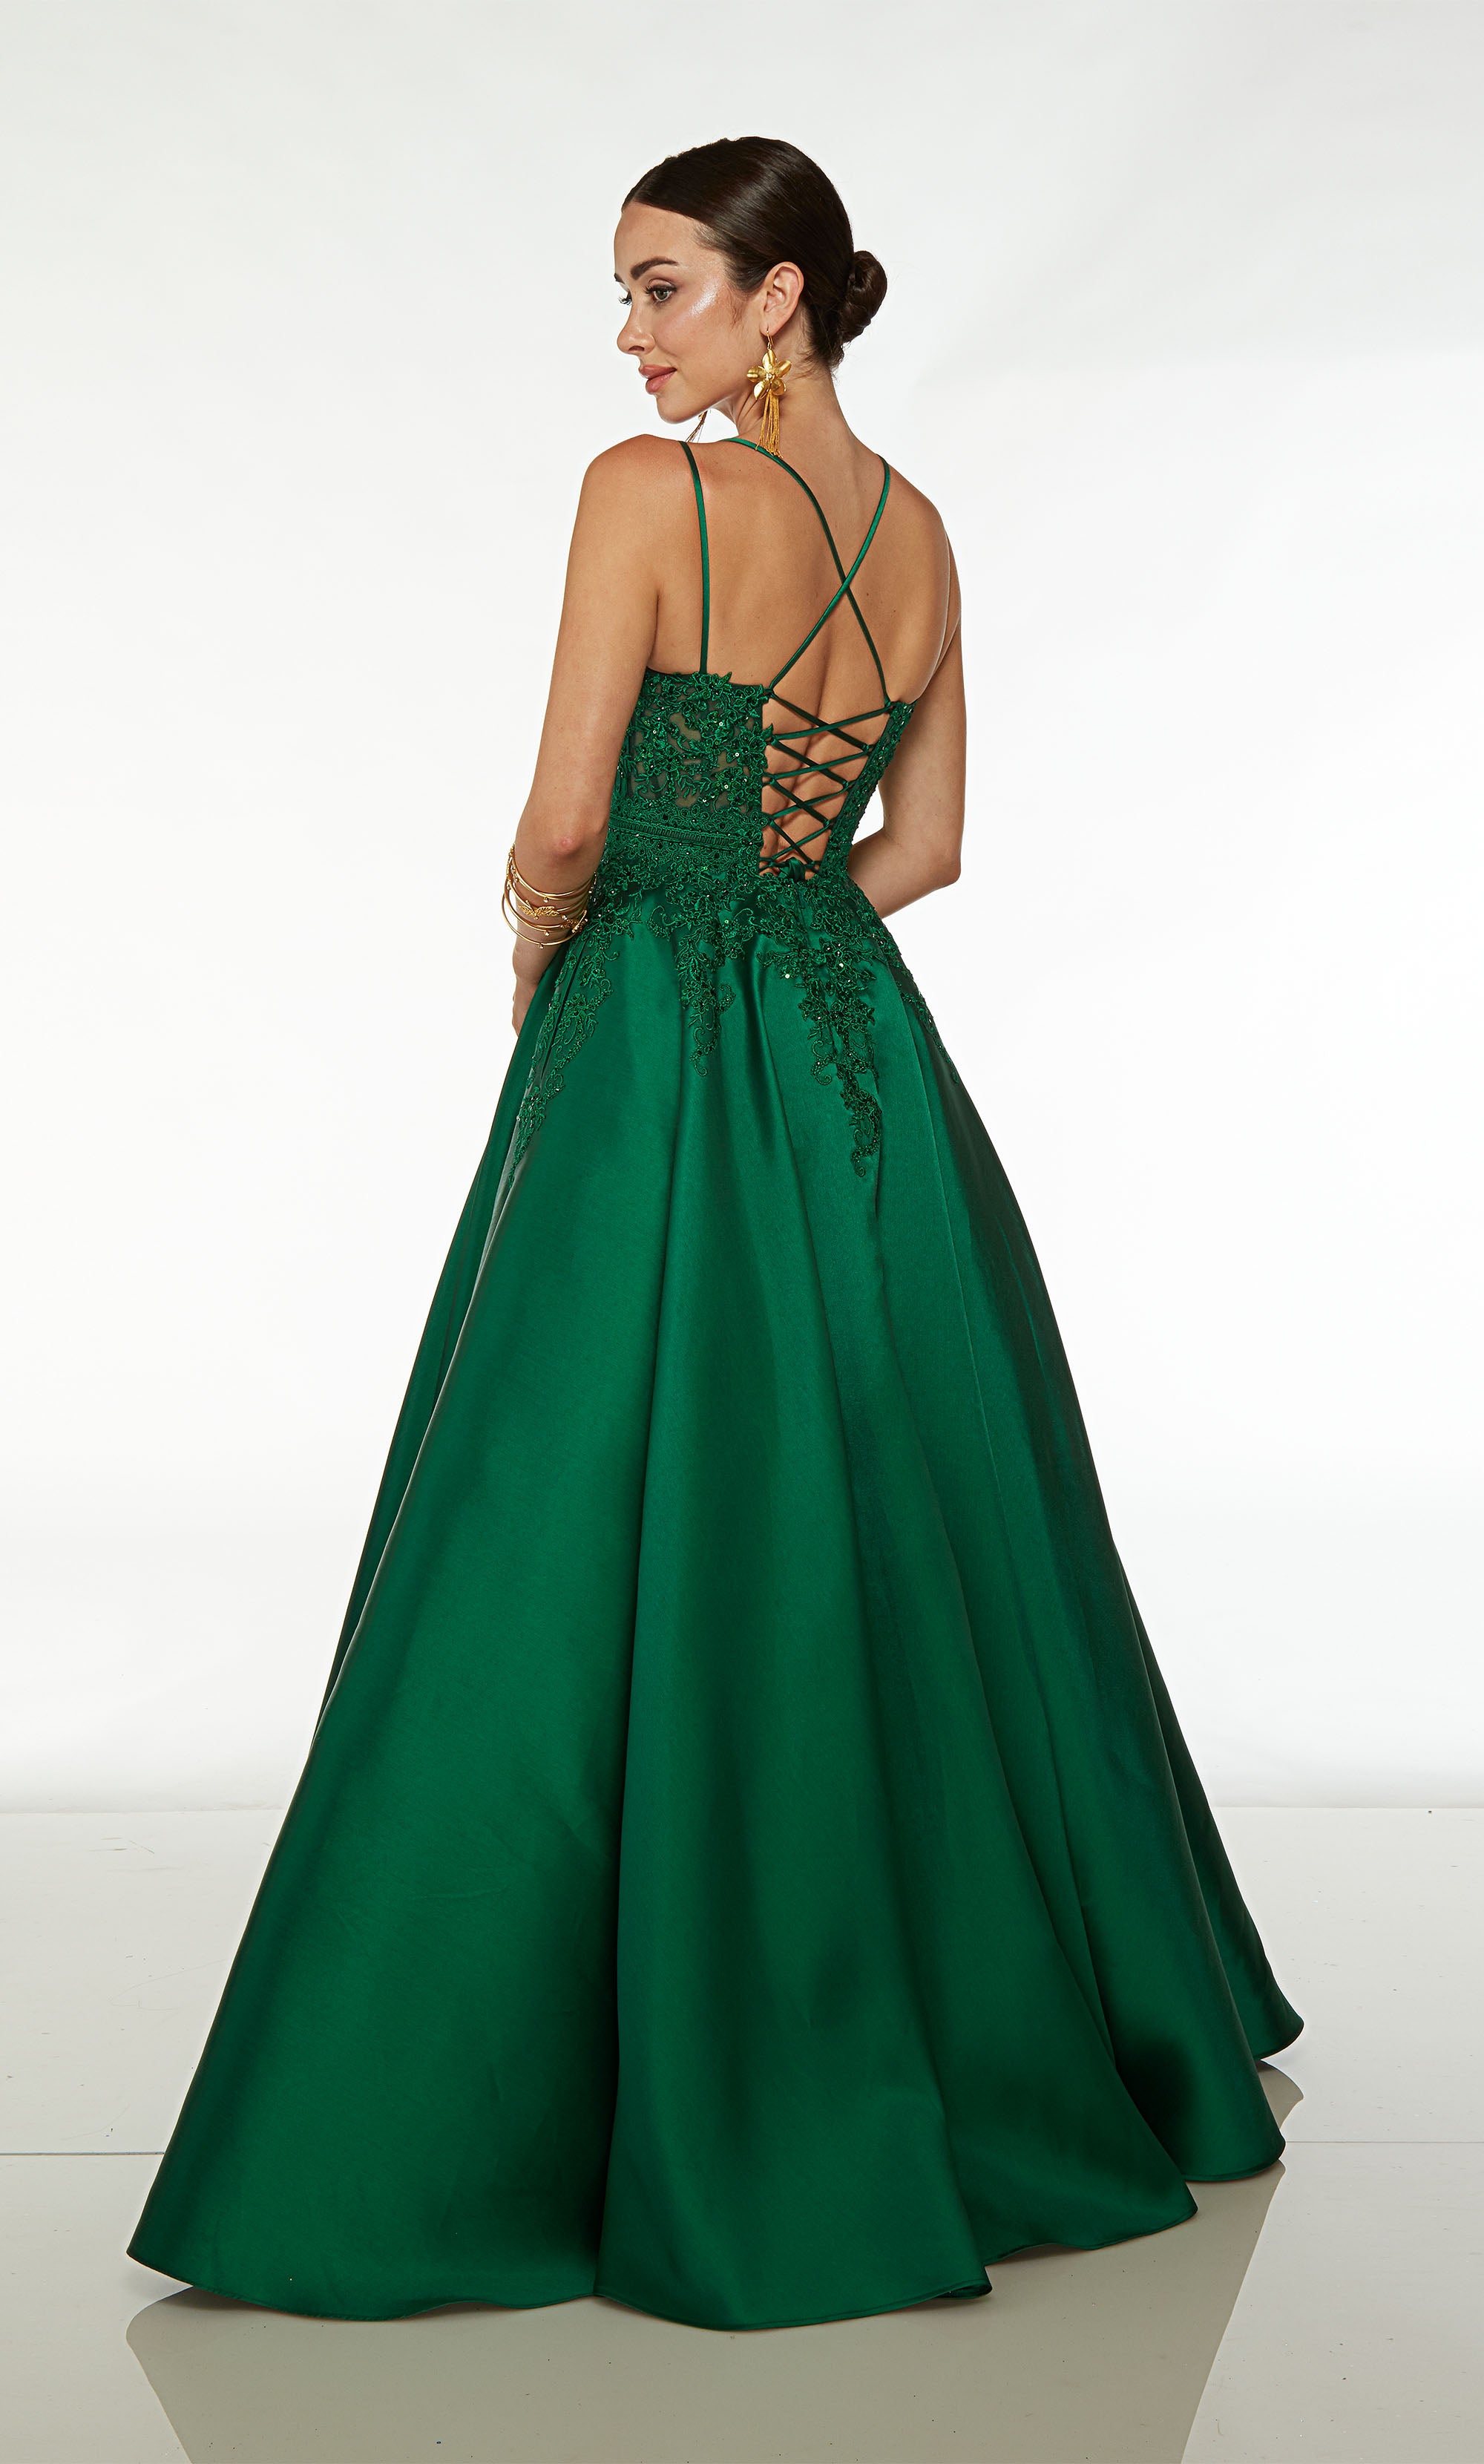 Dark Green Satin Mermaid Dress with Accessories | Green dress makeup, Green  satin dress, Emerald green dresses